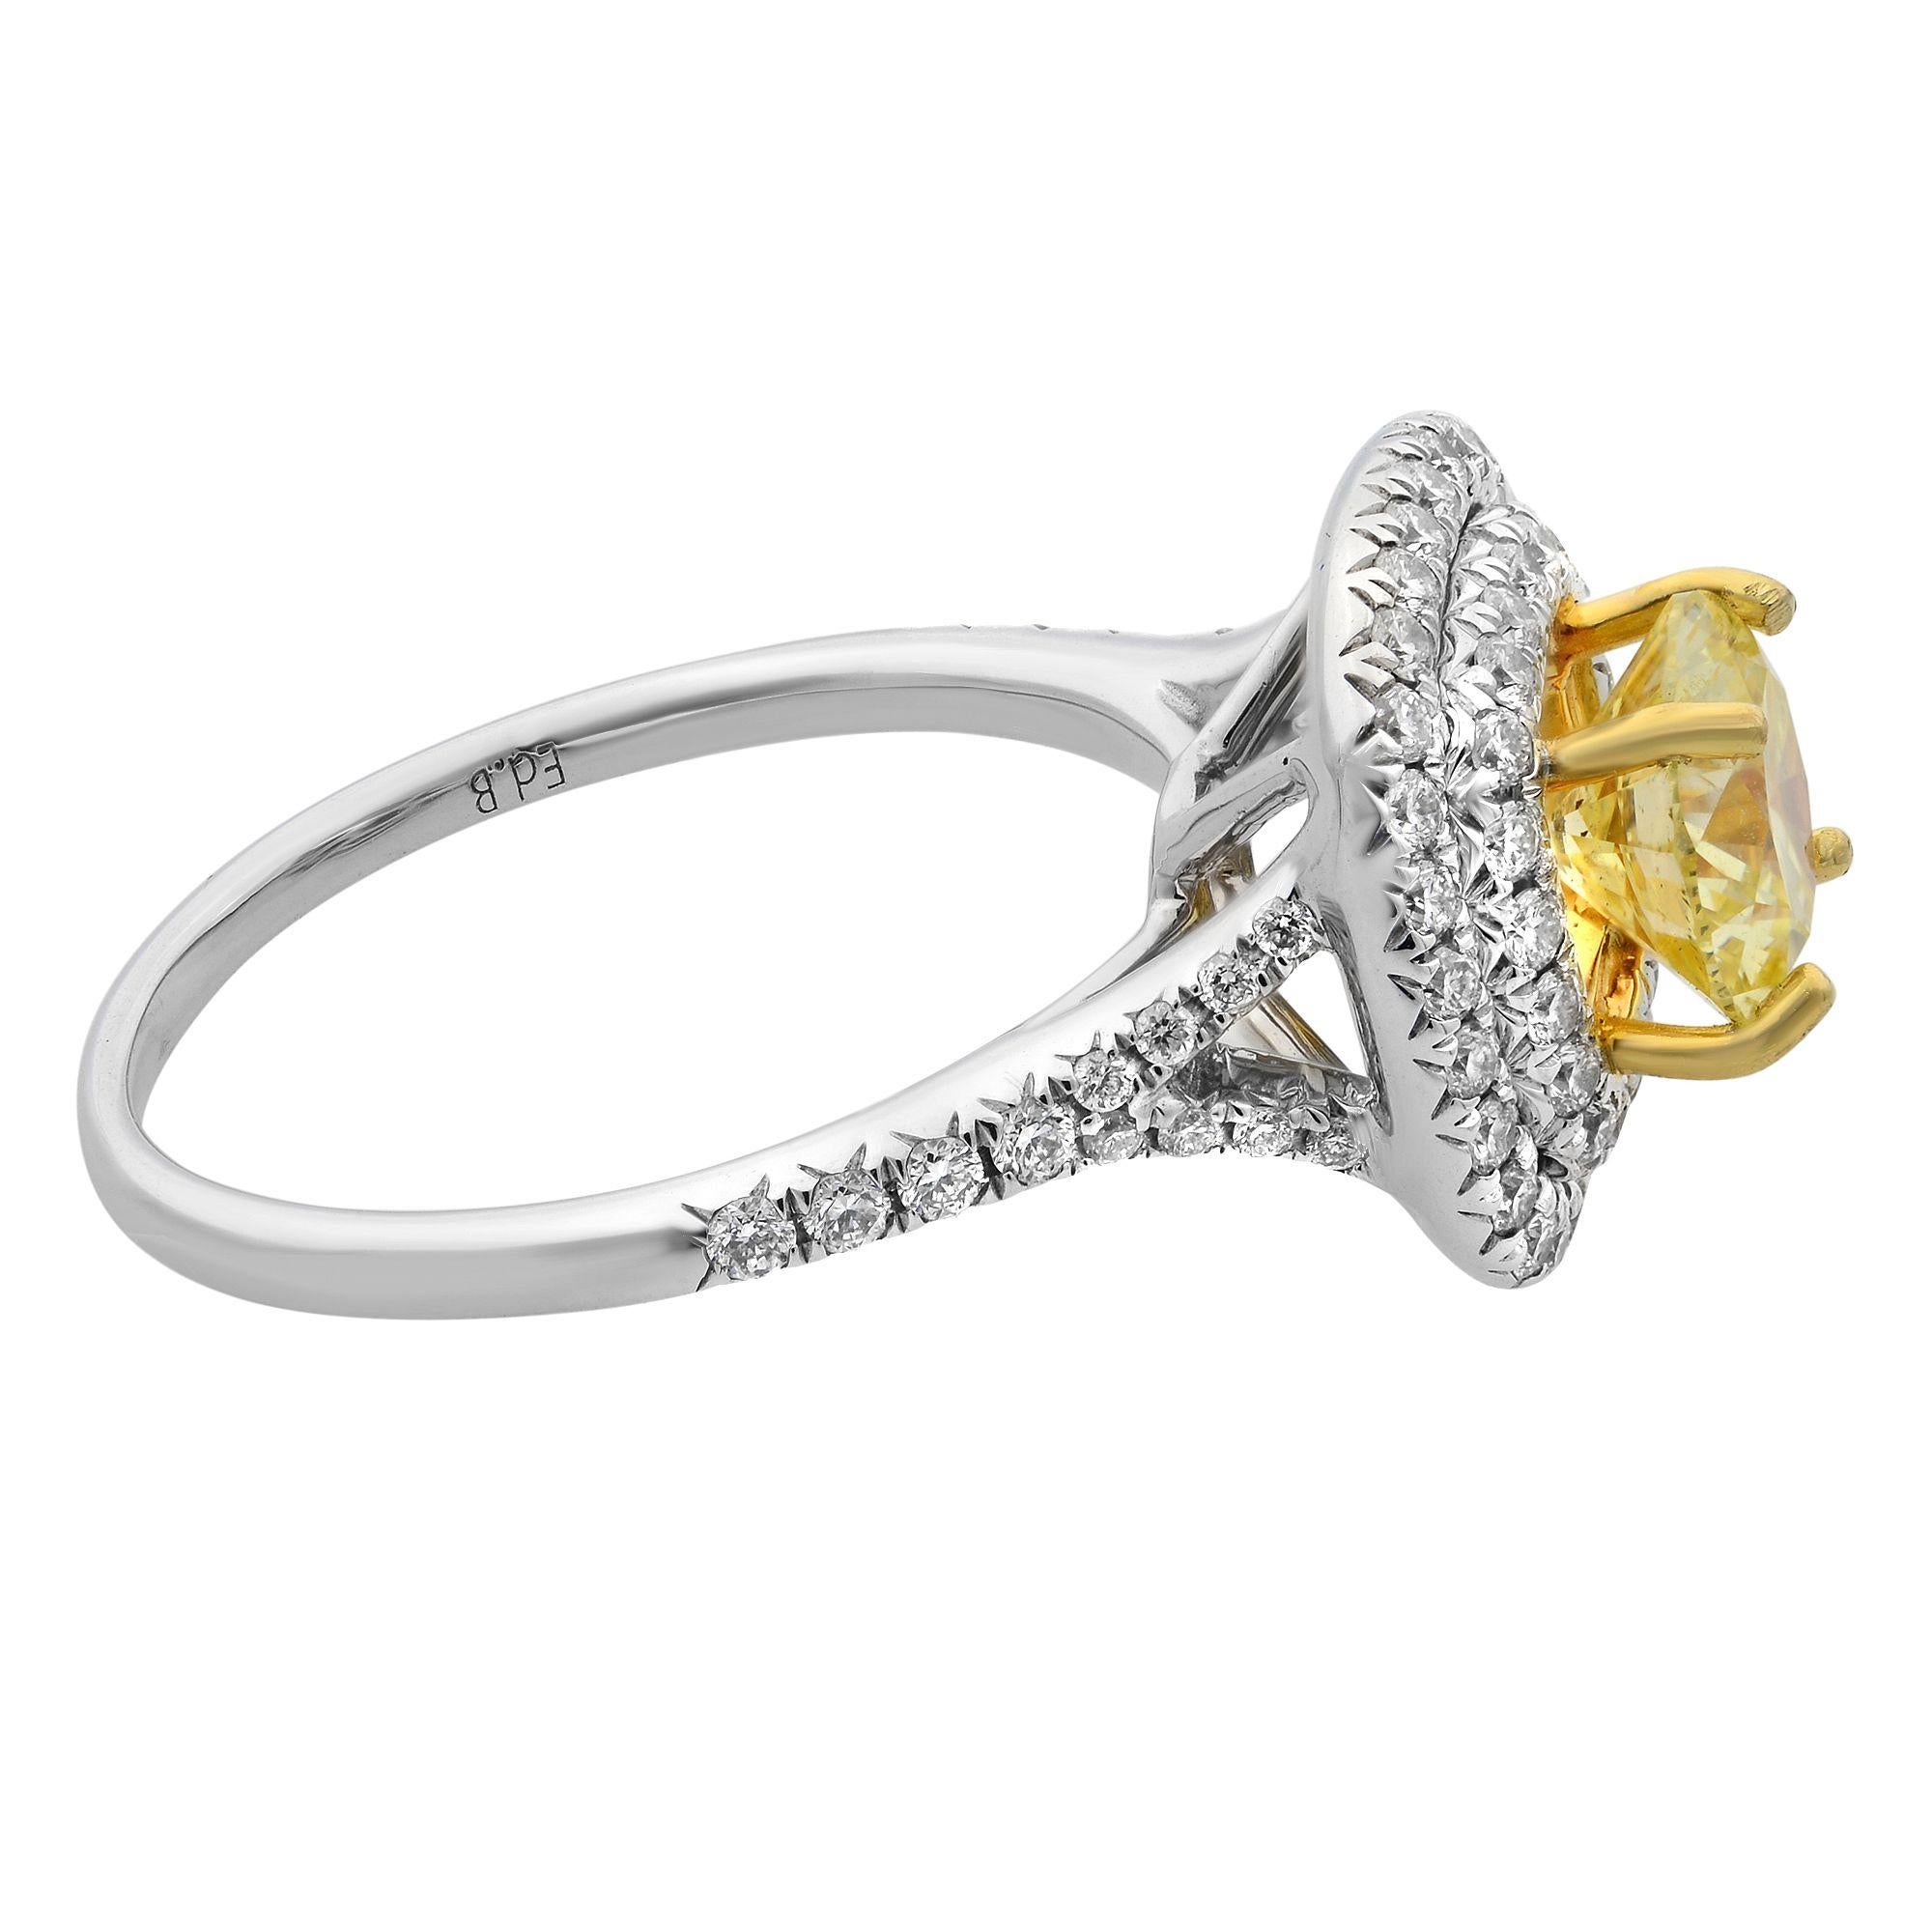 Modern Rachel Koen 18 Karat White Gold Round Cut Fancy Yellow Diamond Ring 1.13 Carat For Sale